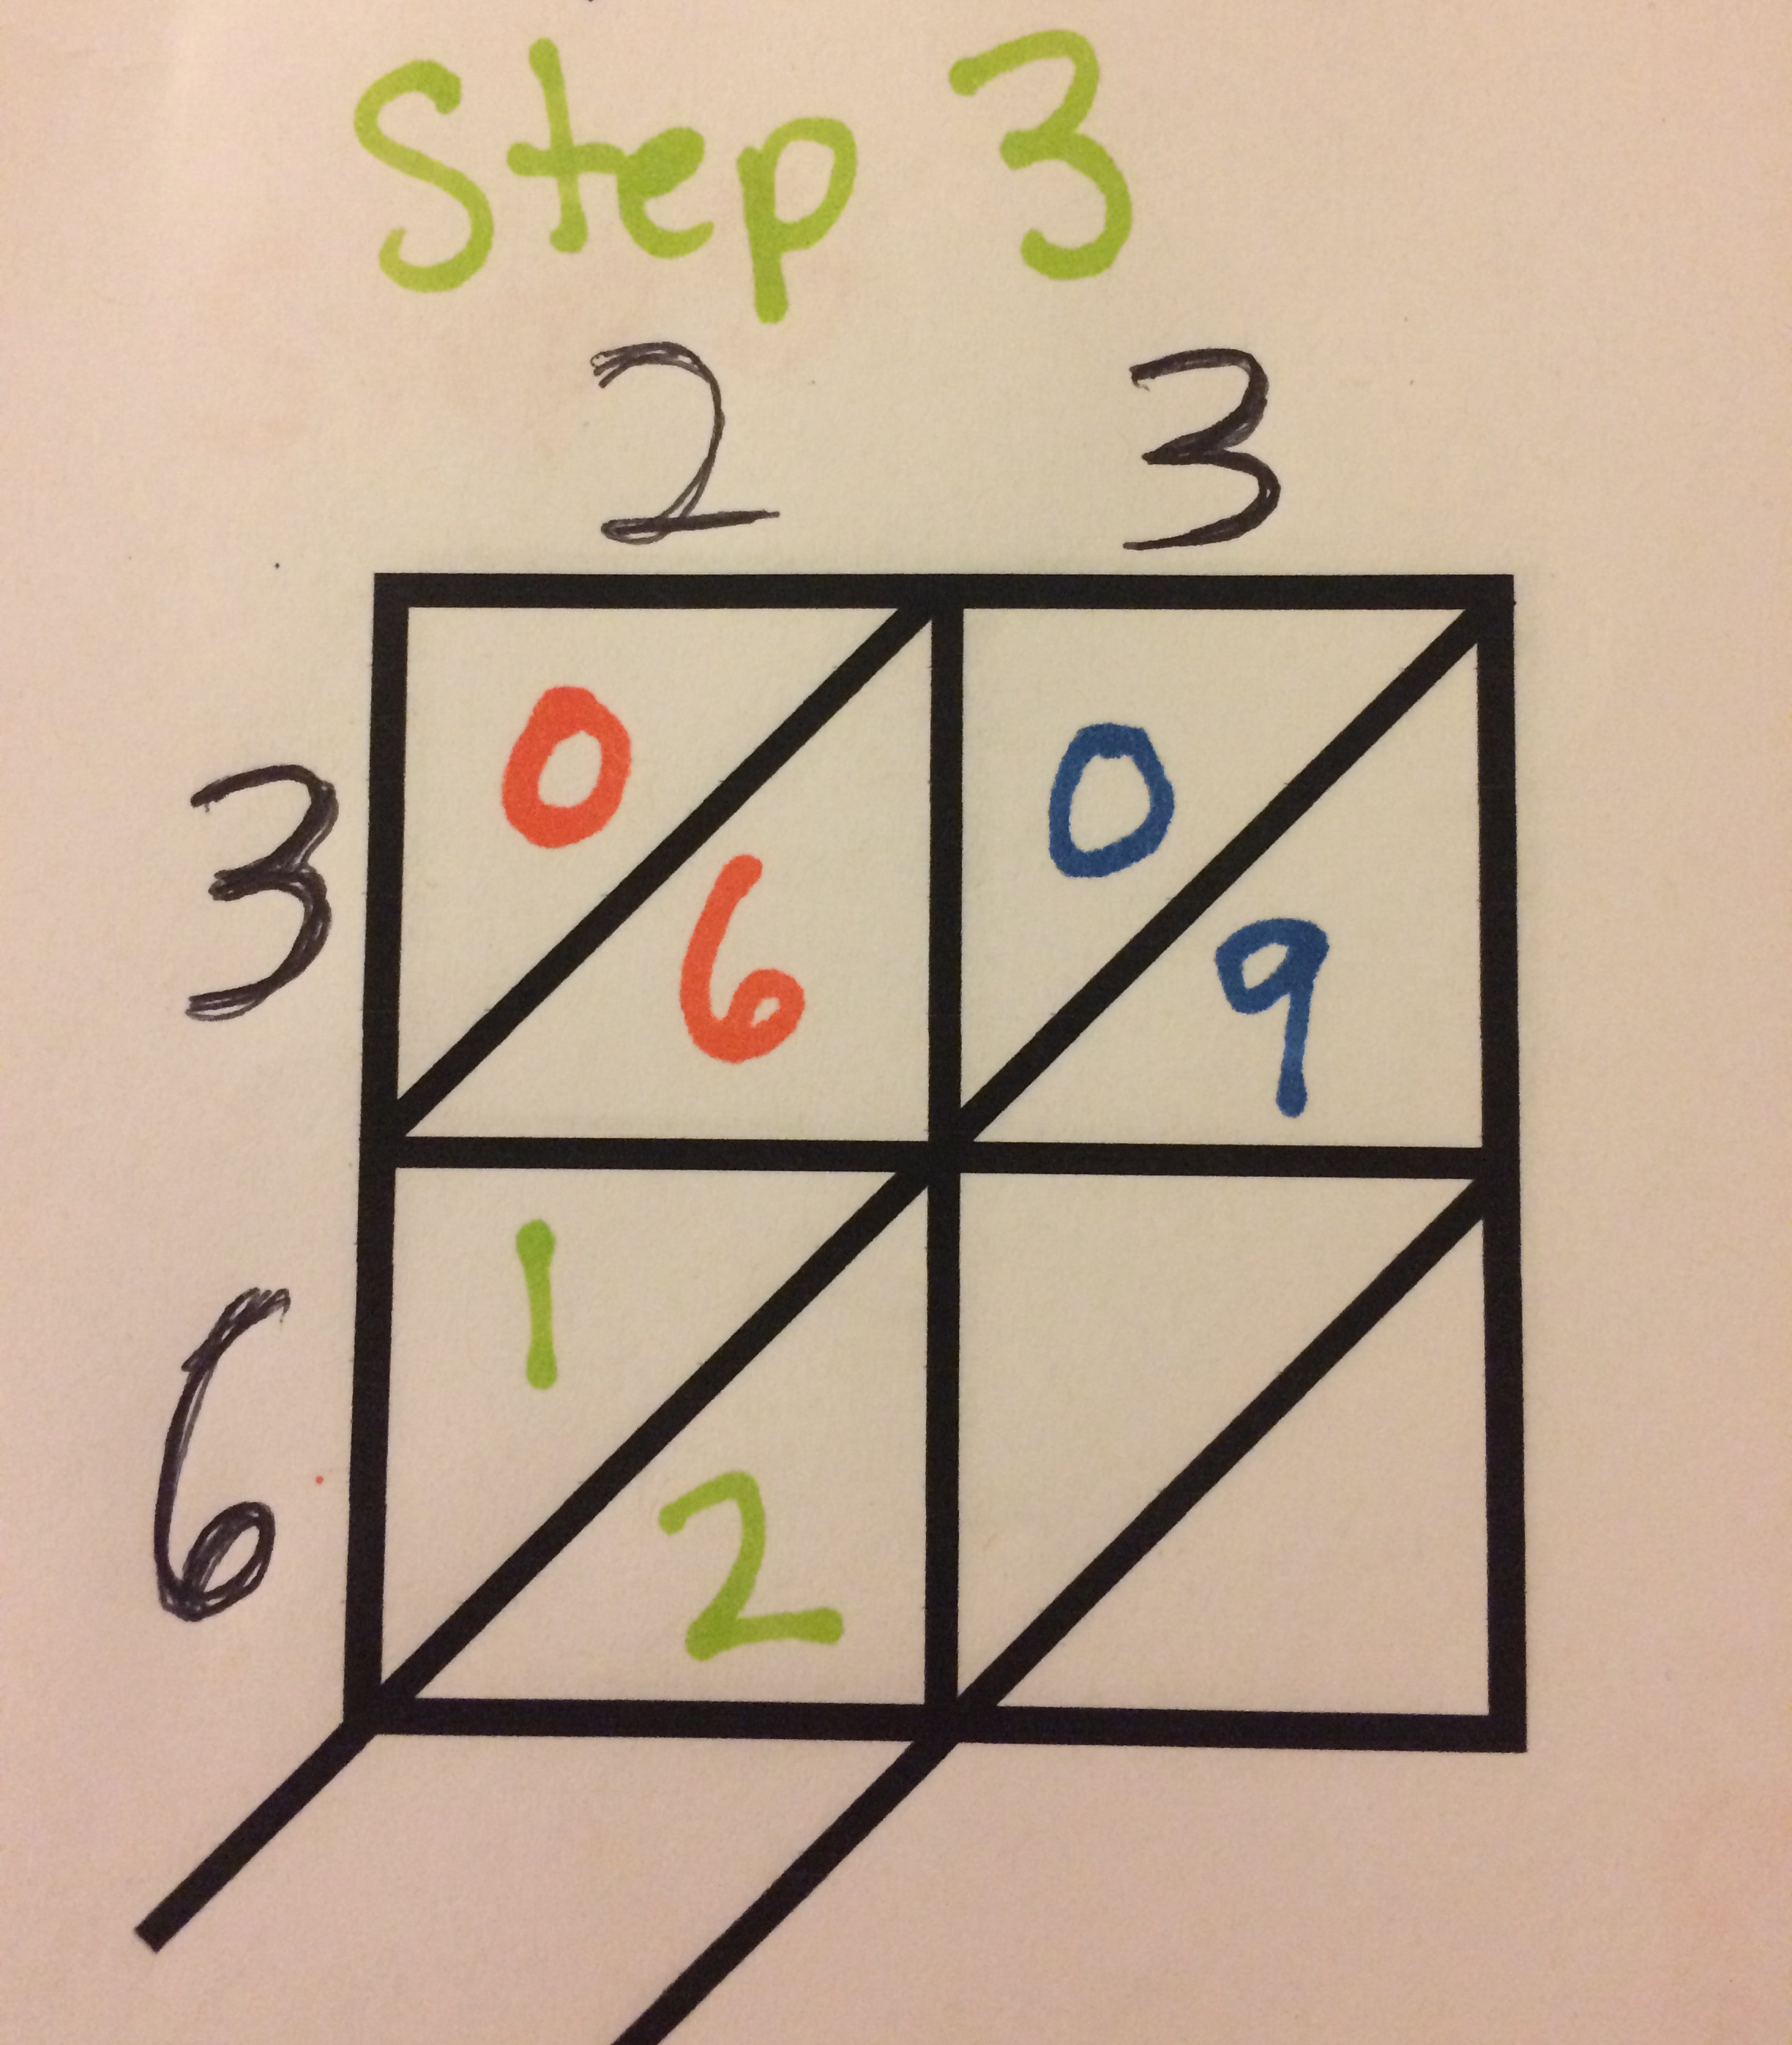 lattice method multiplication 3 digit by 2 digit